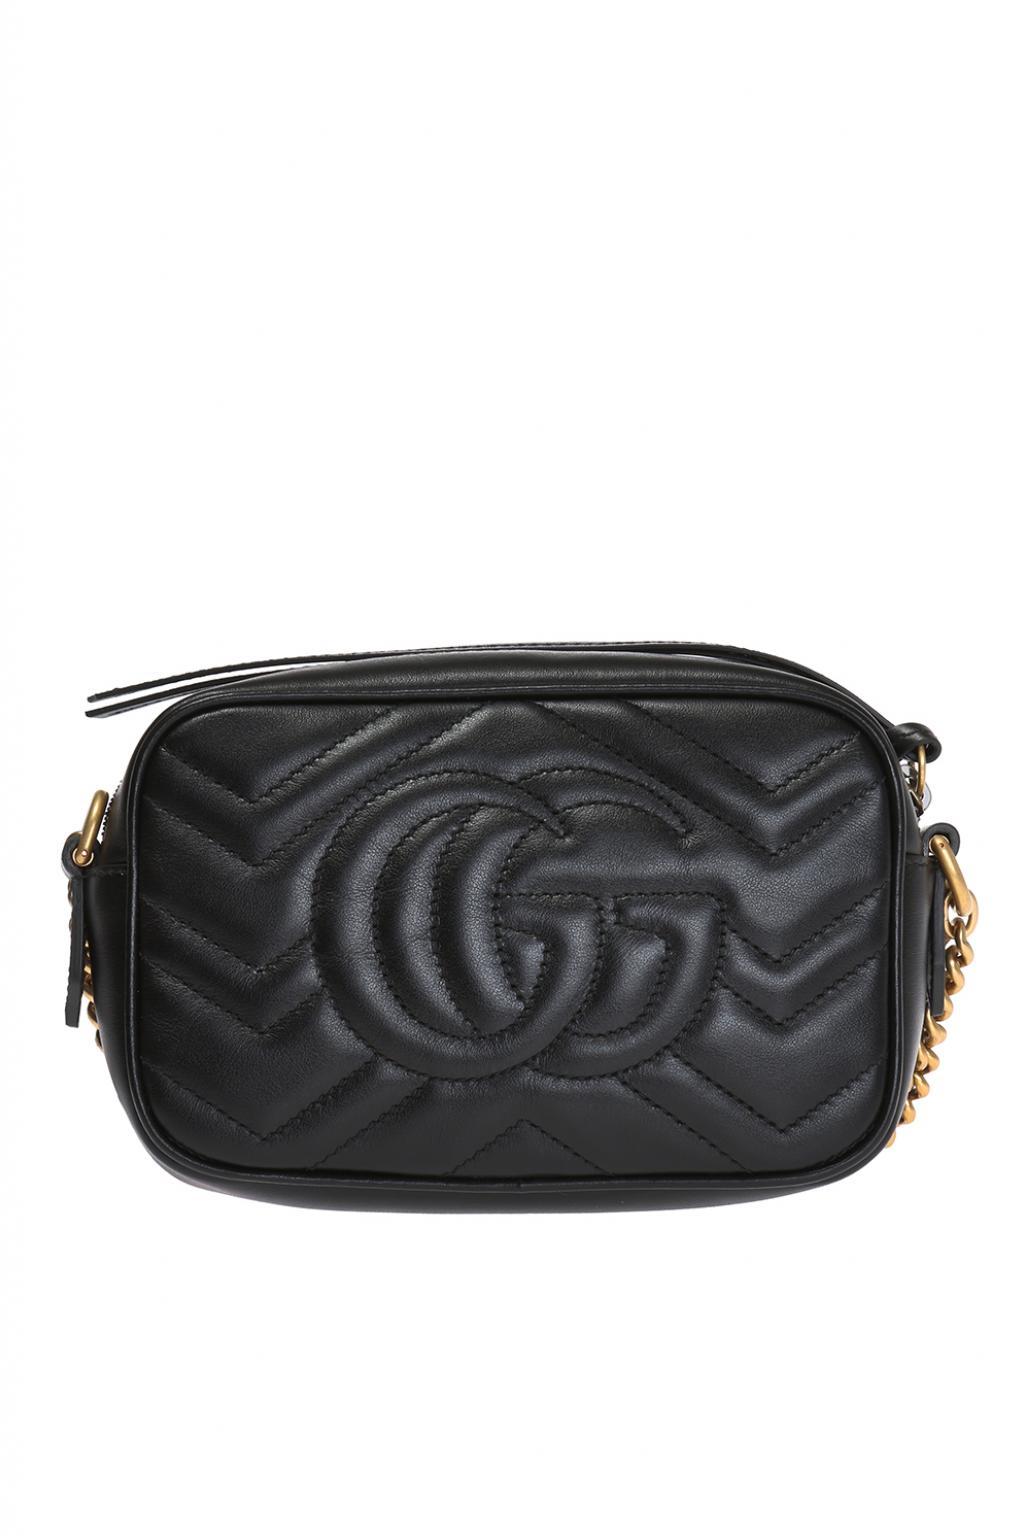 Gucci Leather &#39;GG Marmont&#39; Shoulder Bag in Red Black (Black) - Lyst